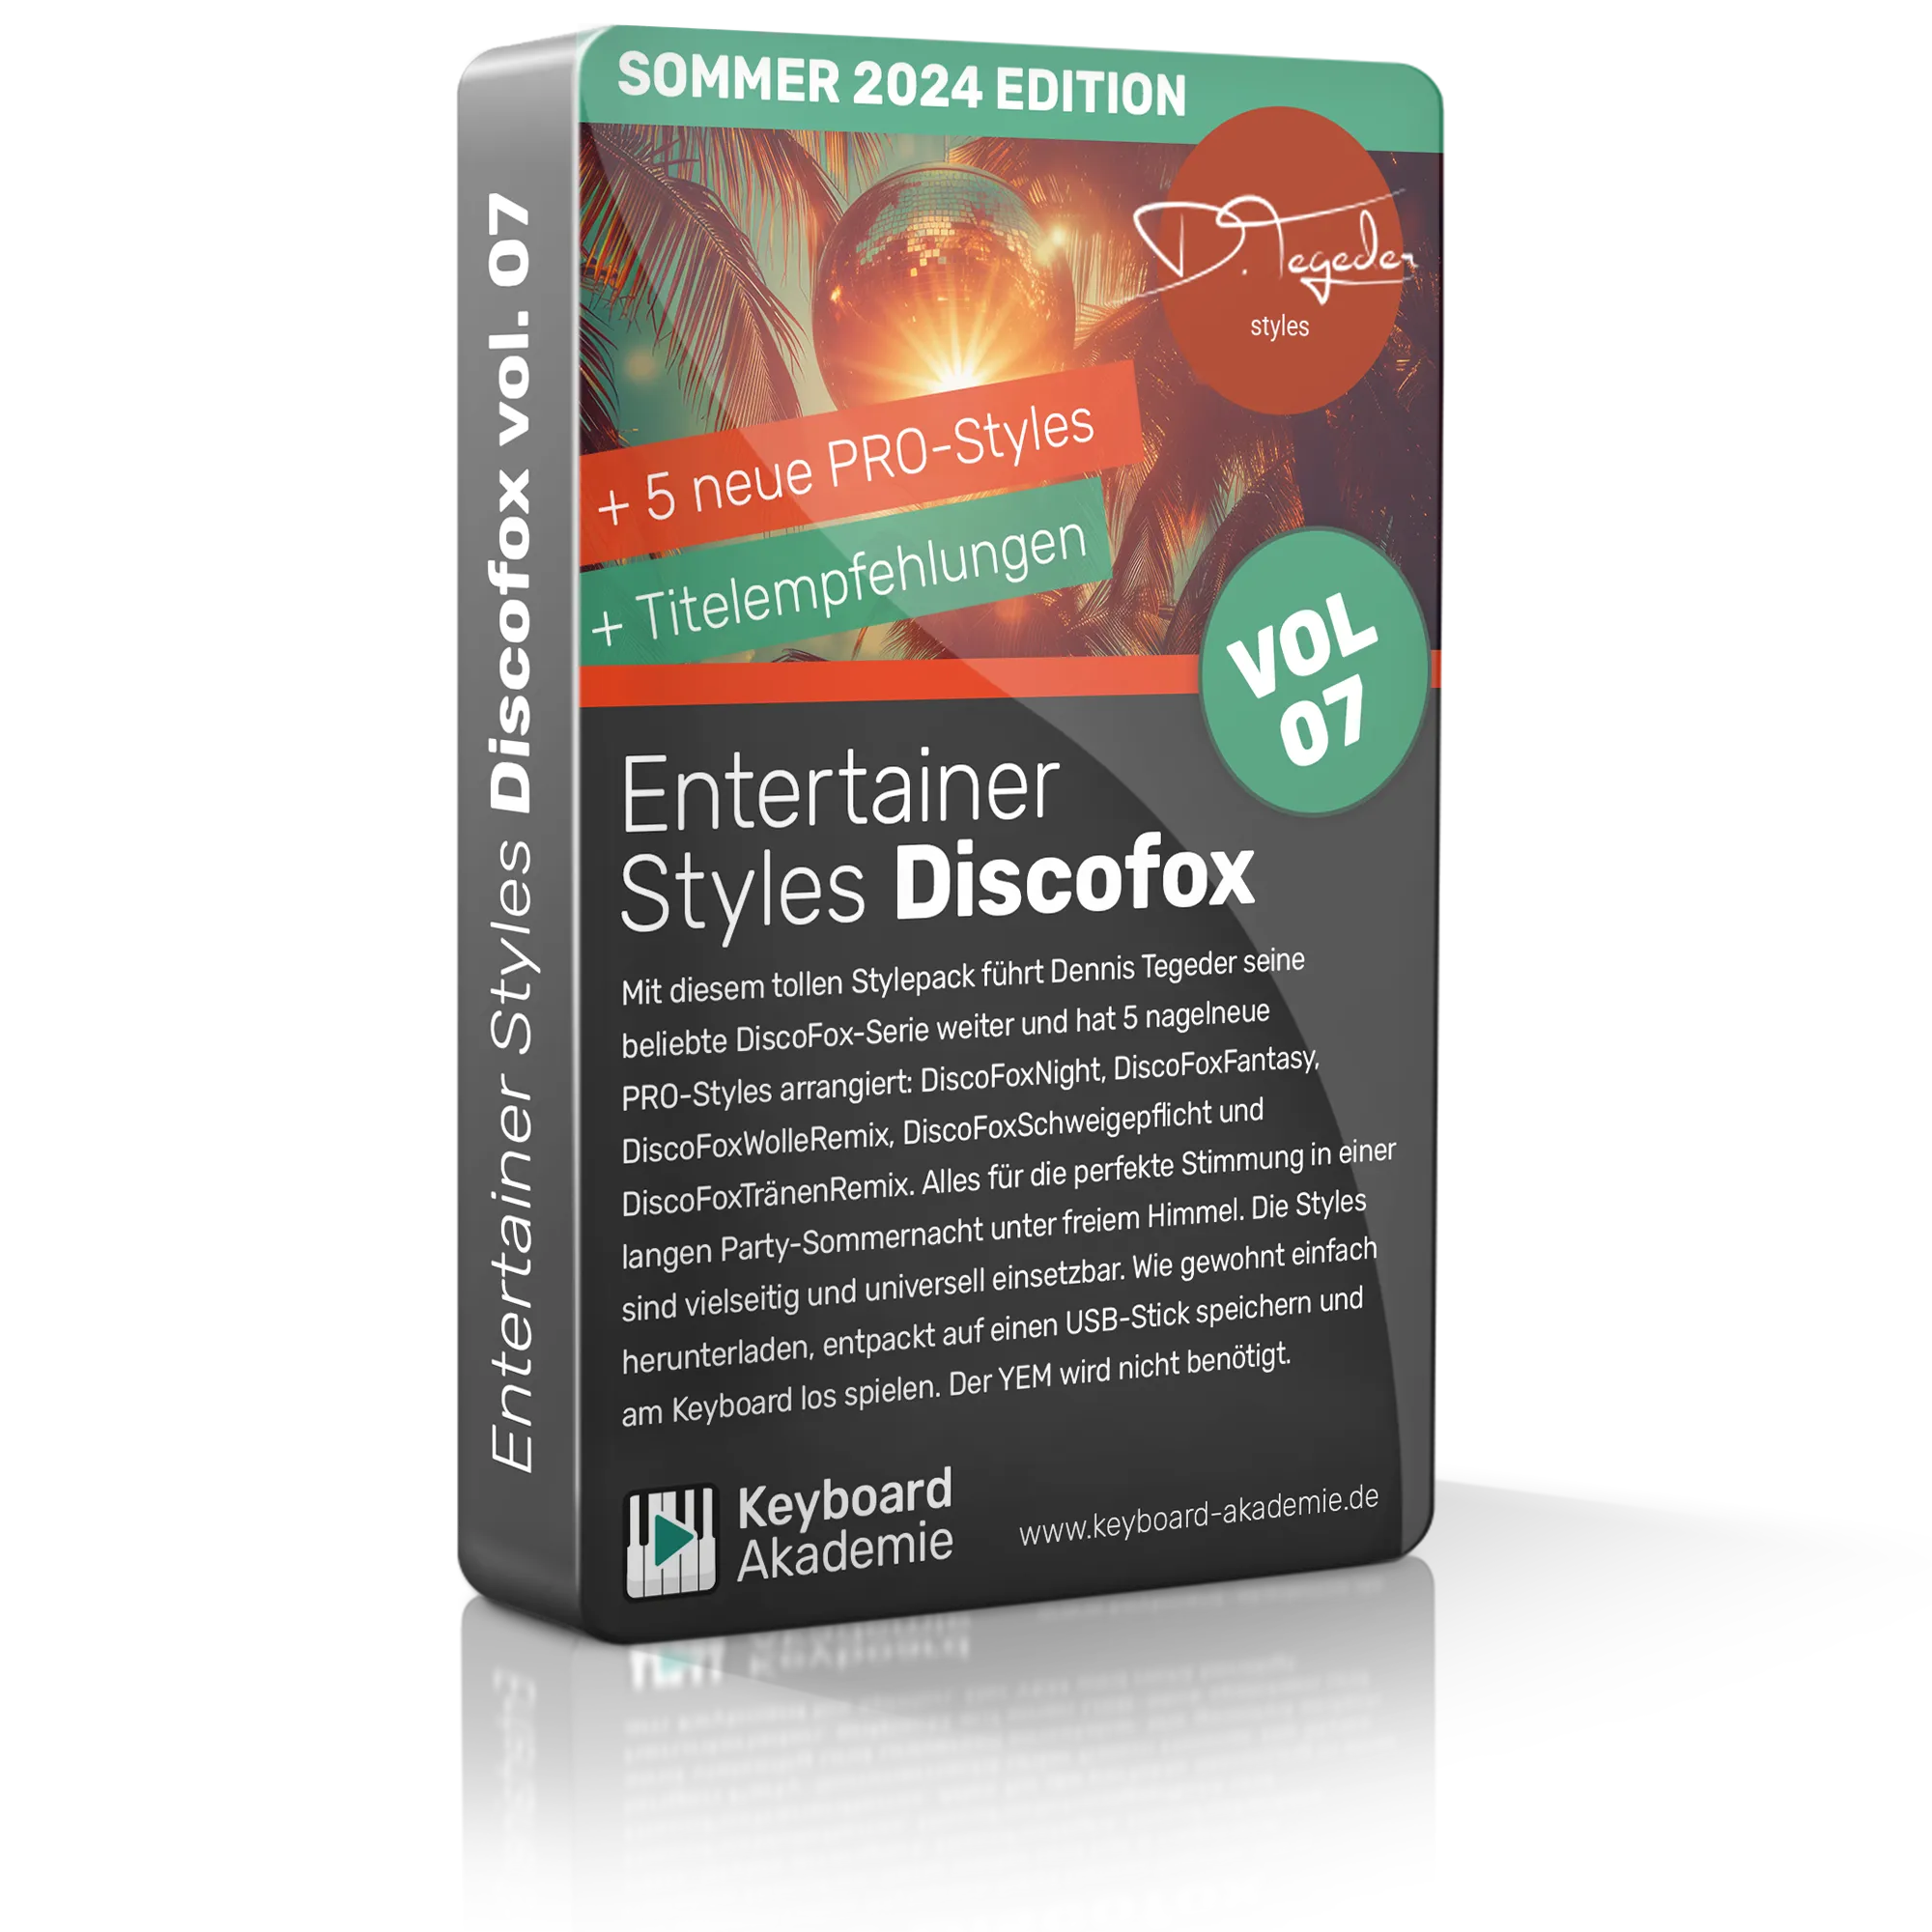 Produktbild Entertainer Styles Discofox vol. 07